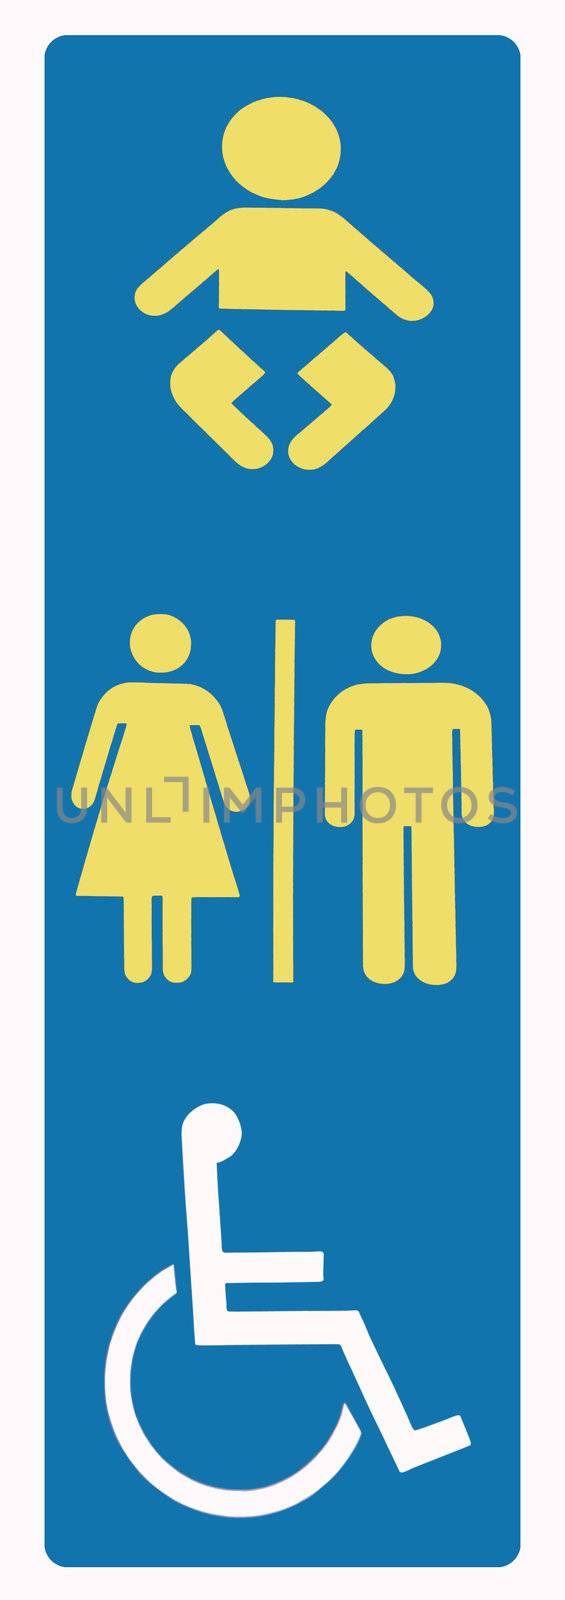 Restroom sign disabled in downtown Melbourne Australia